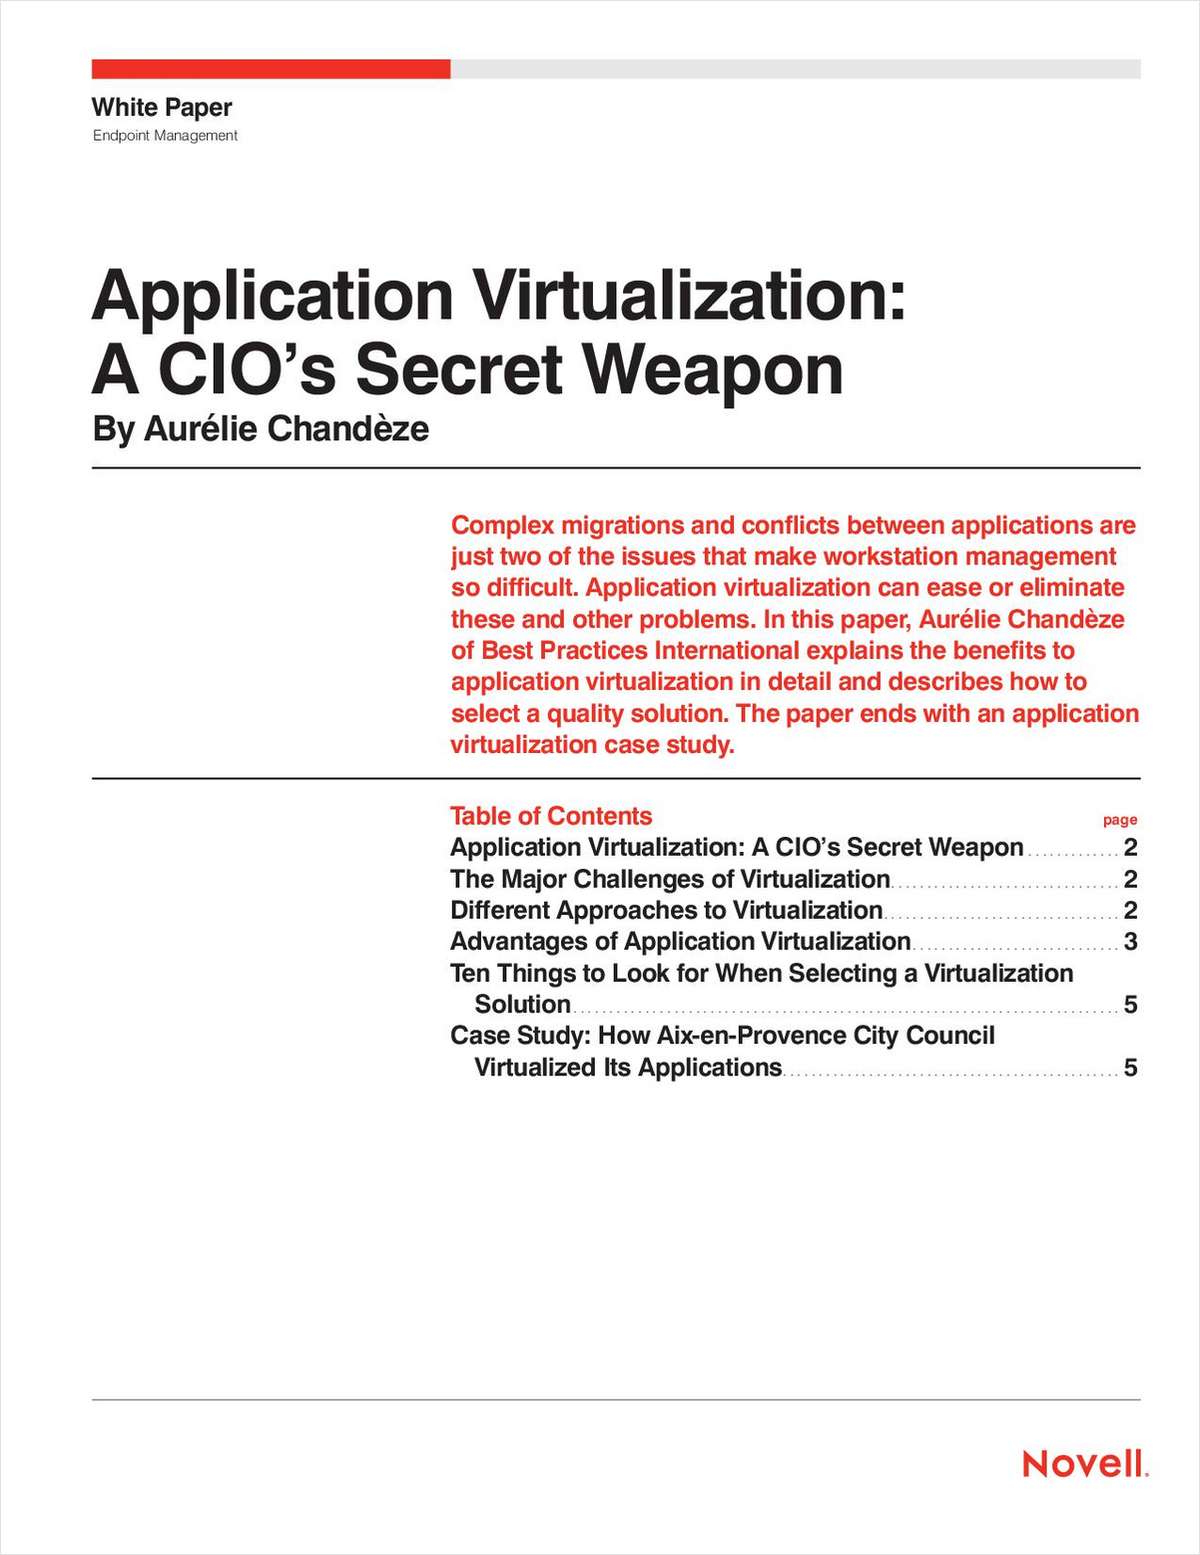 Application Virtualization: A CIO's Secret Weapon